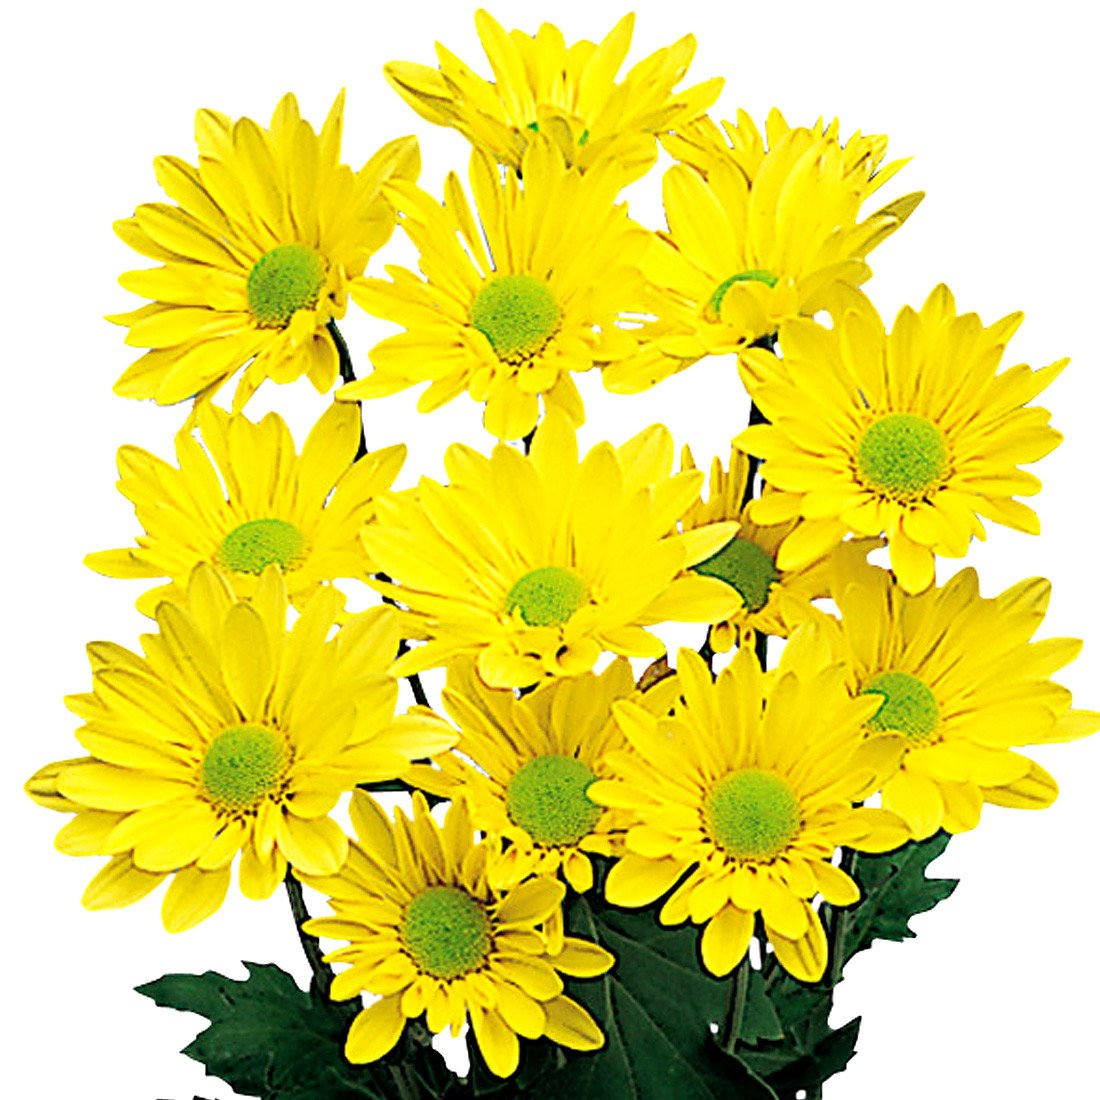 Yellow Daisy Pom Poms Flowers for Sale